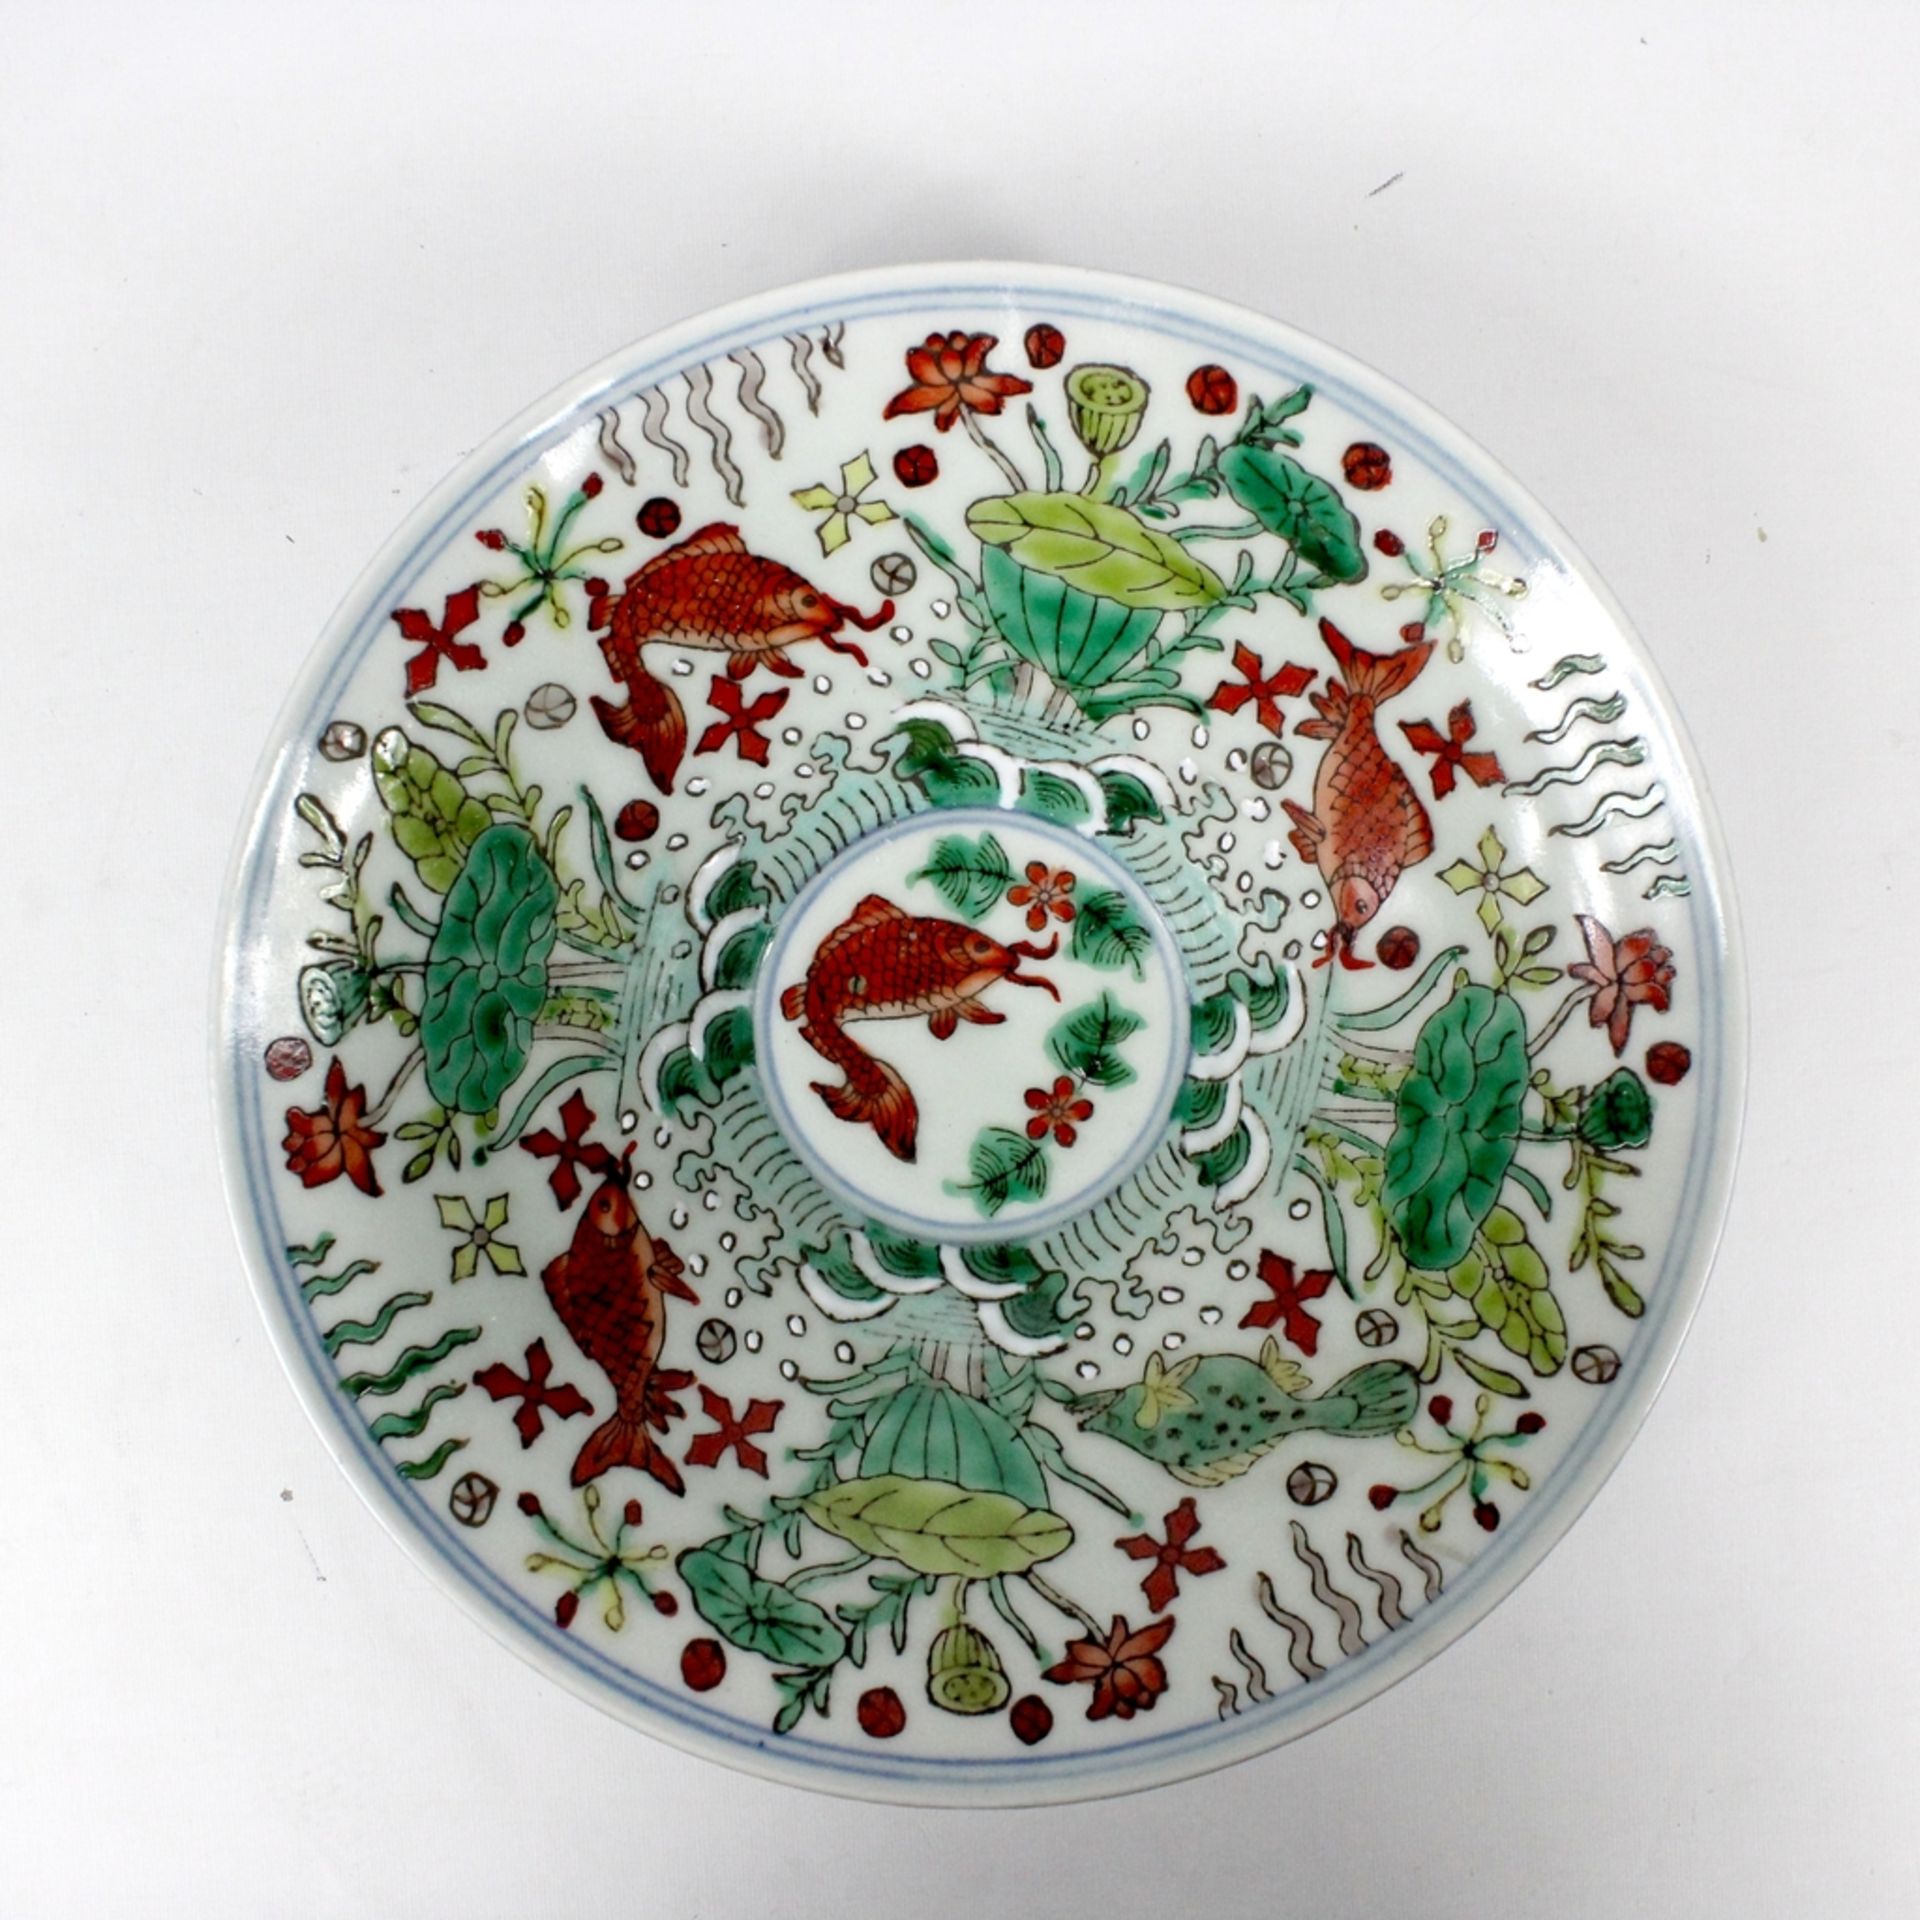 China Porzellanschale mit Fischmotiven, Qing-Dynastie - Image 2 of 4